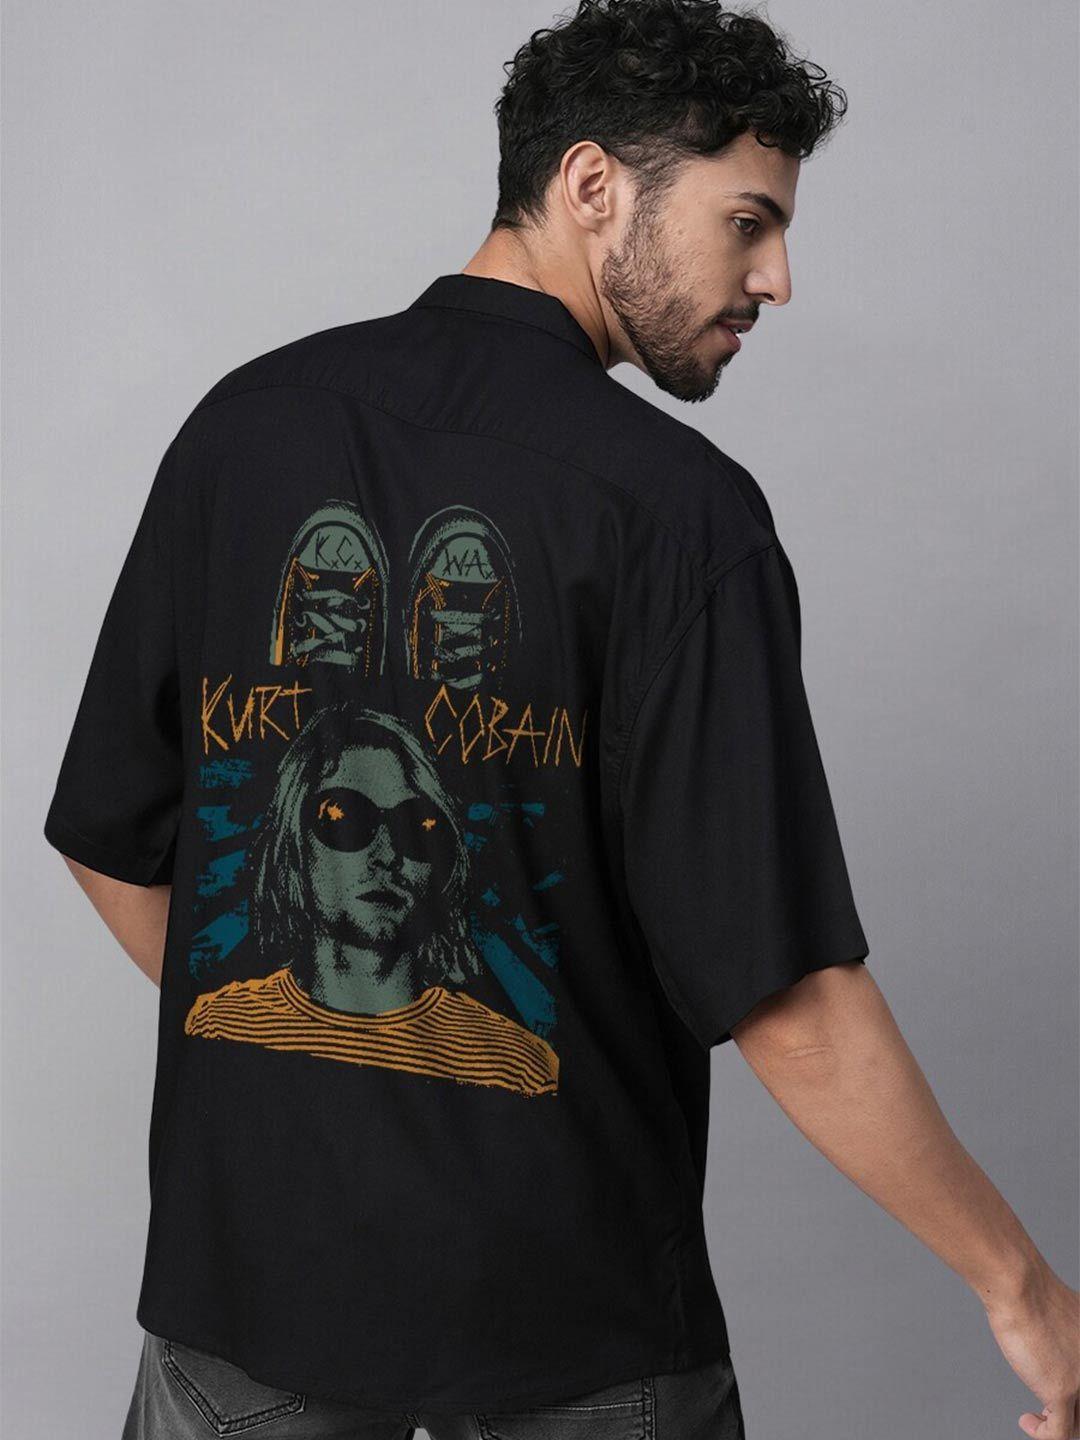 pronk relaxed kurt cobain printed drop-shoulder sleeves oversized casual shirt